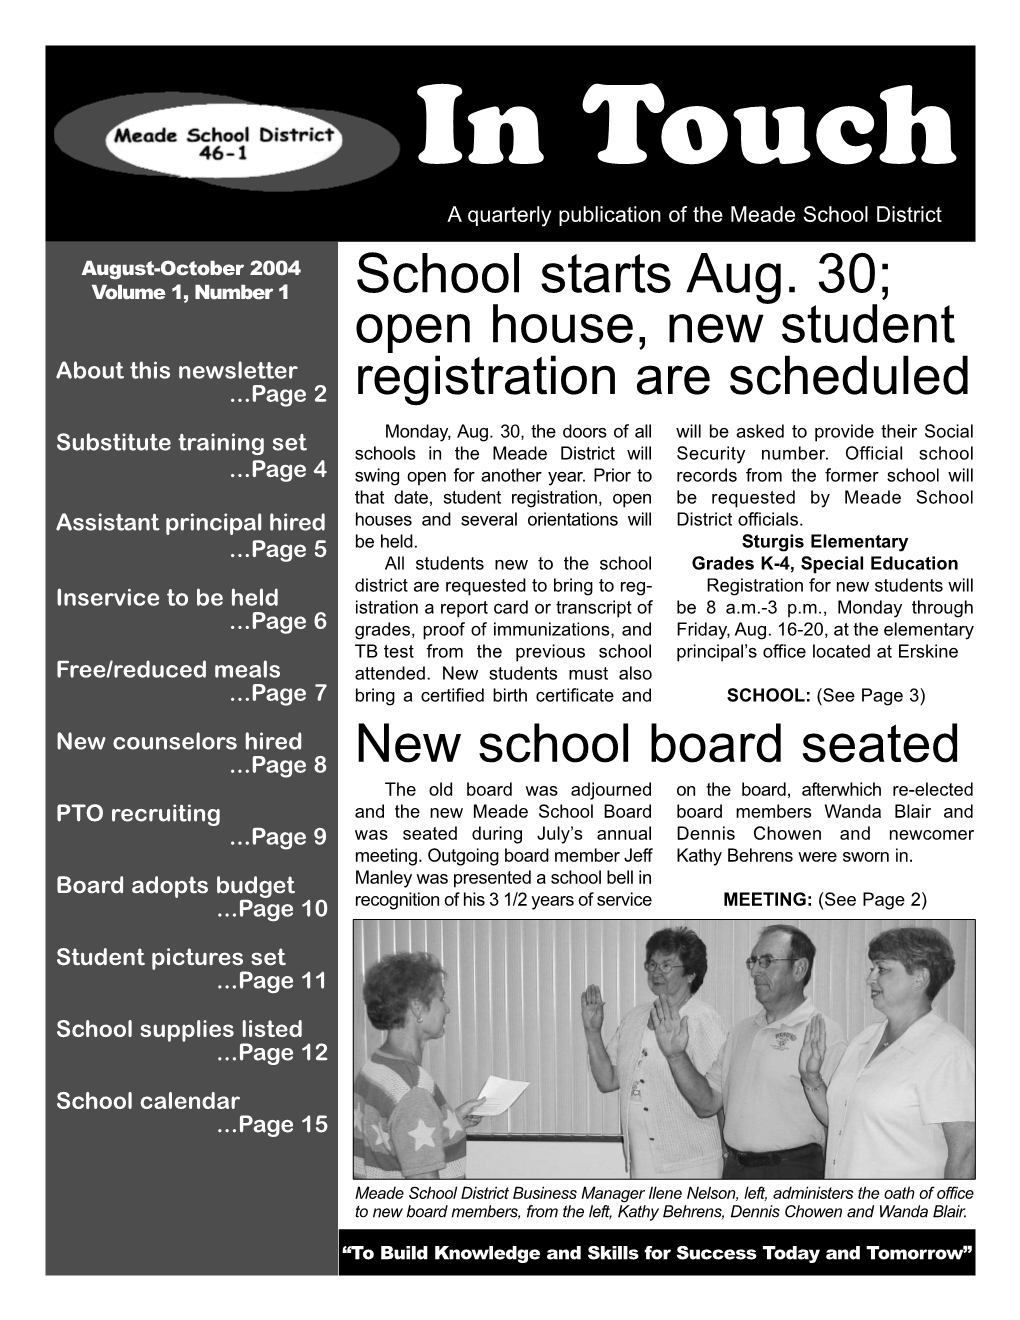 August-October 2004 Volume 1, Number 1 School Starts Aug